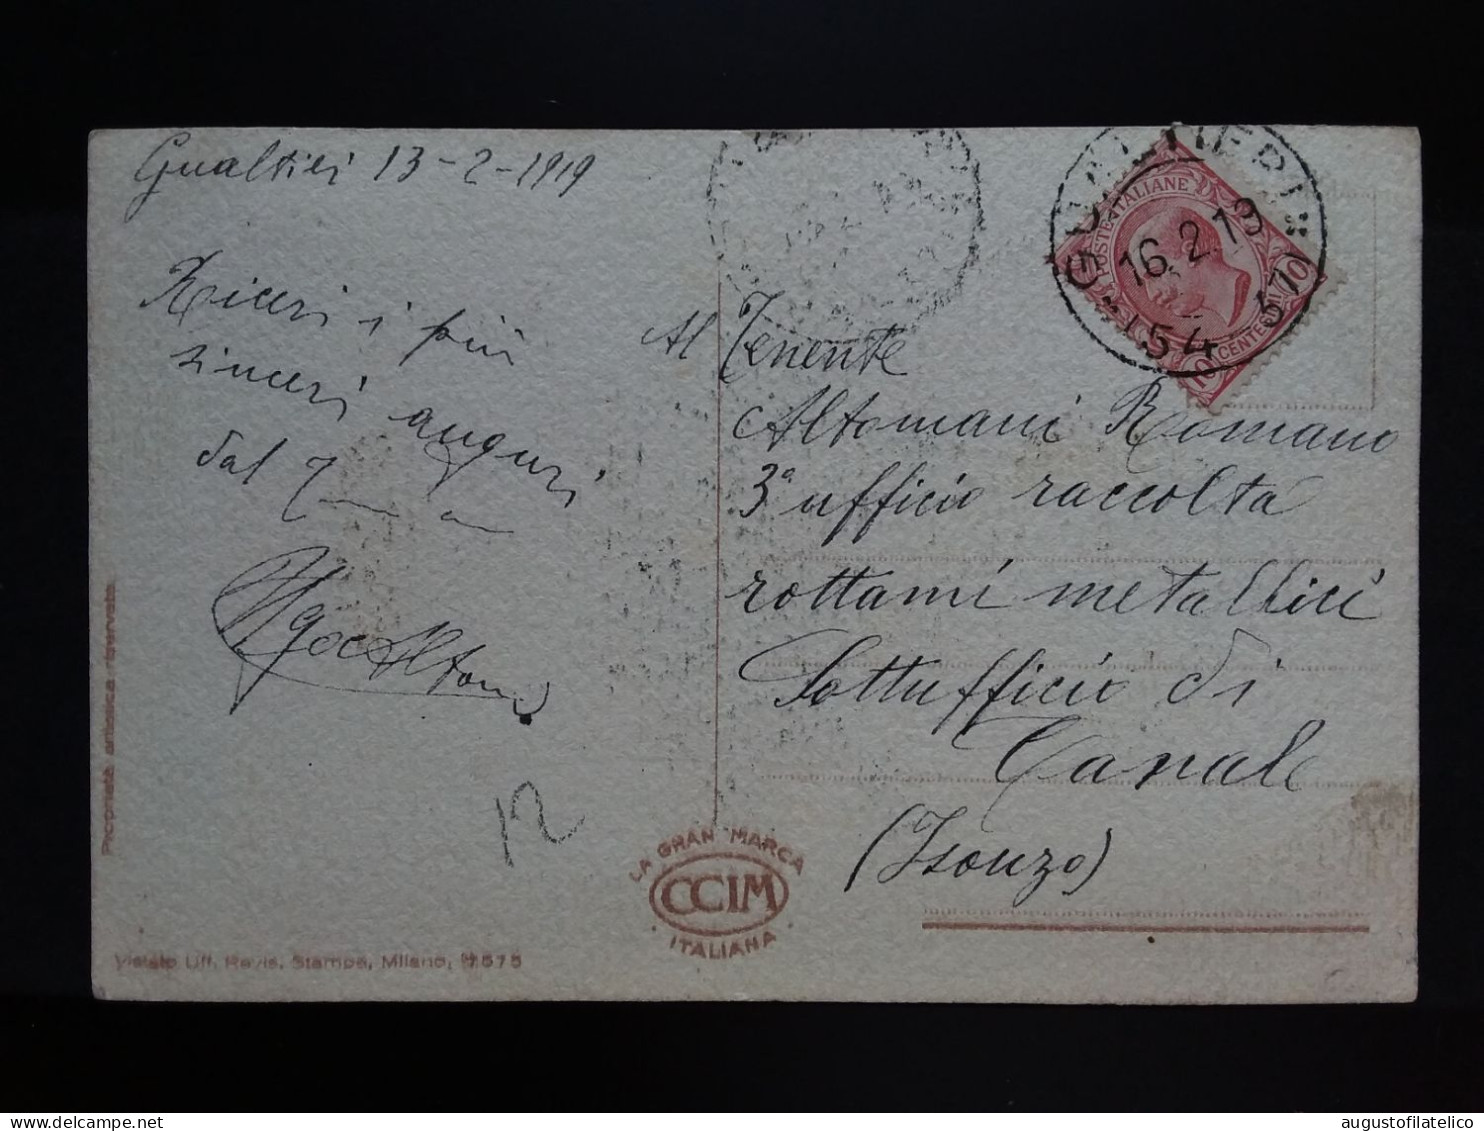 CROCE ROSSA - Crocerossina - Cartolina Viaggiata Nel 1919 + Spese Postali - Red Cross